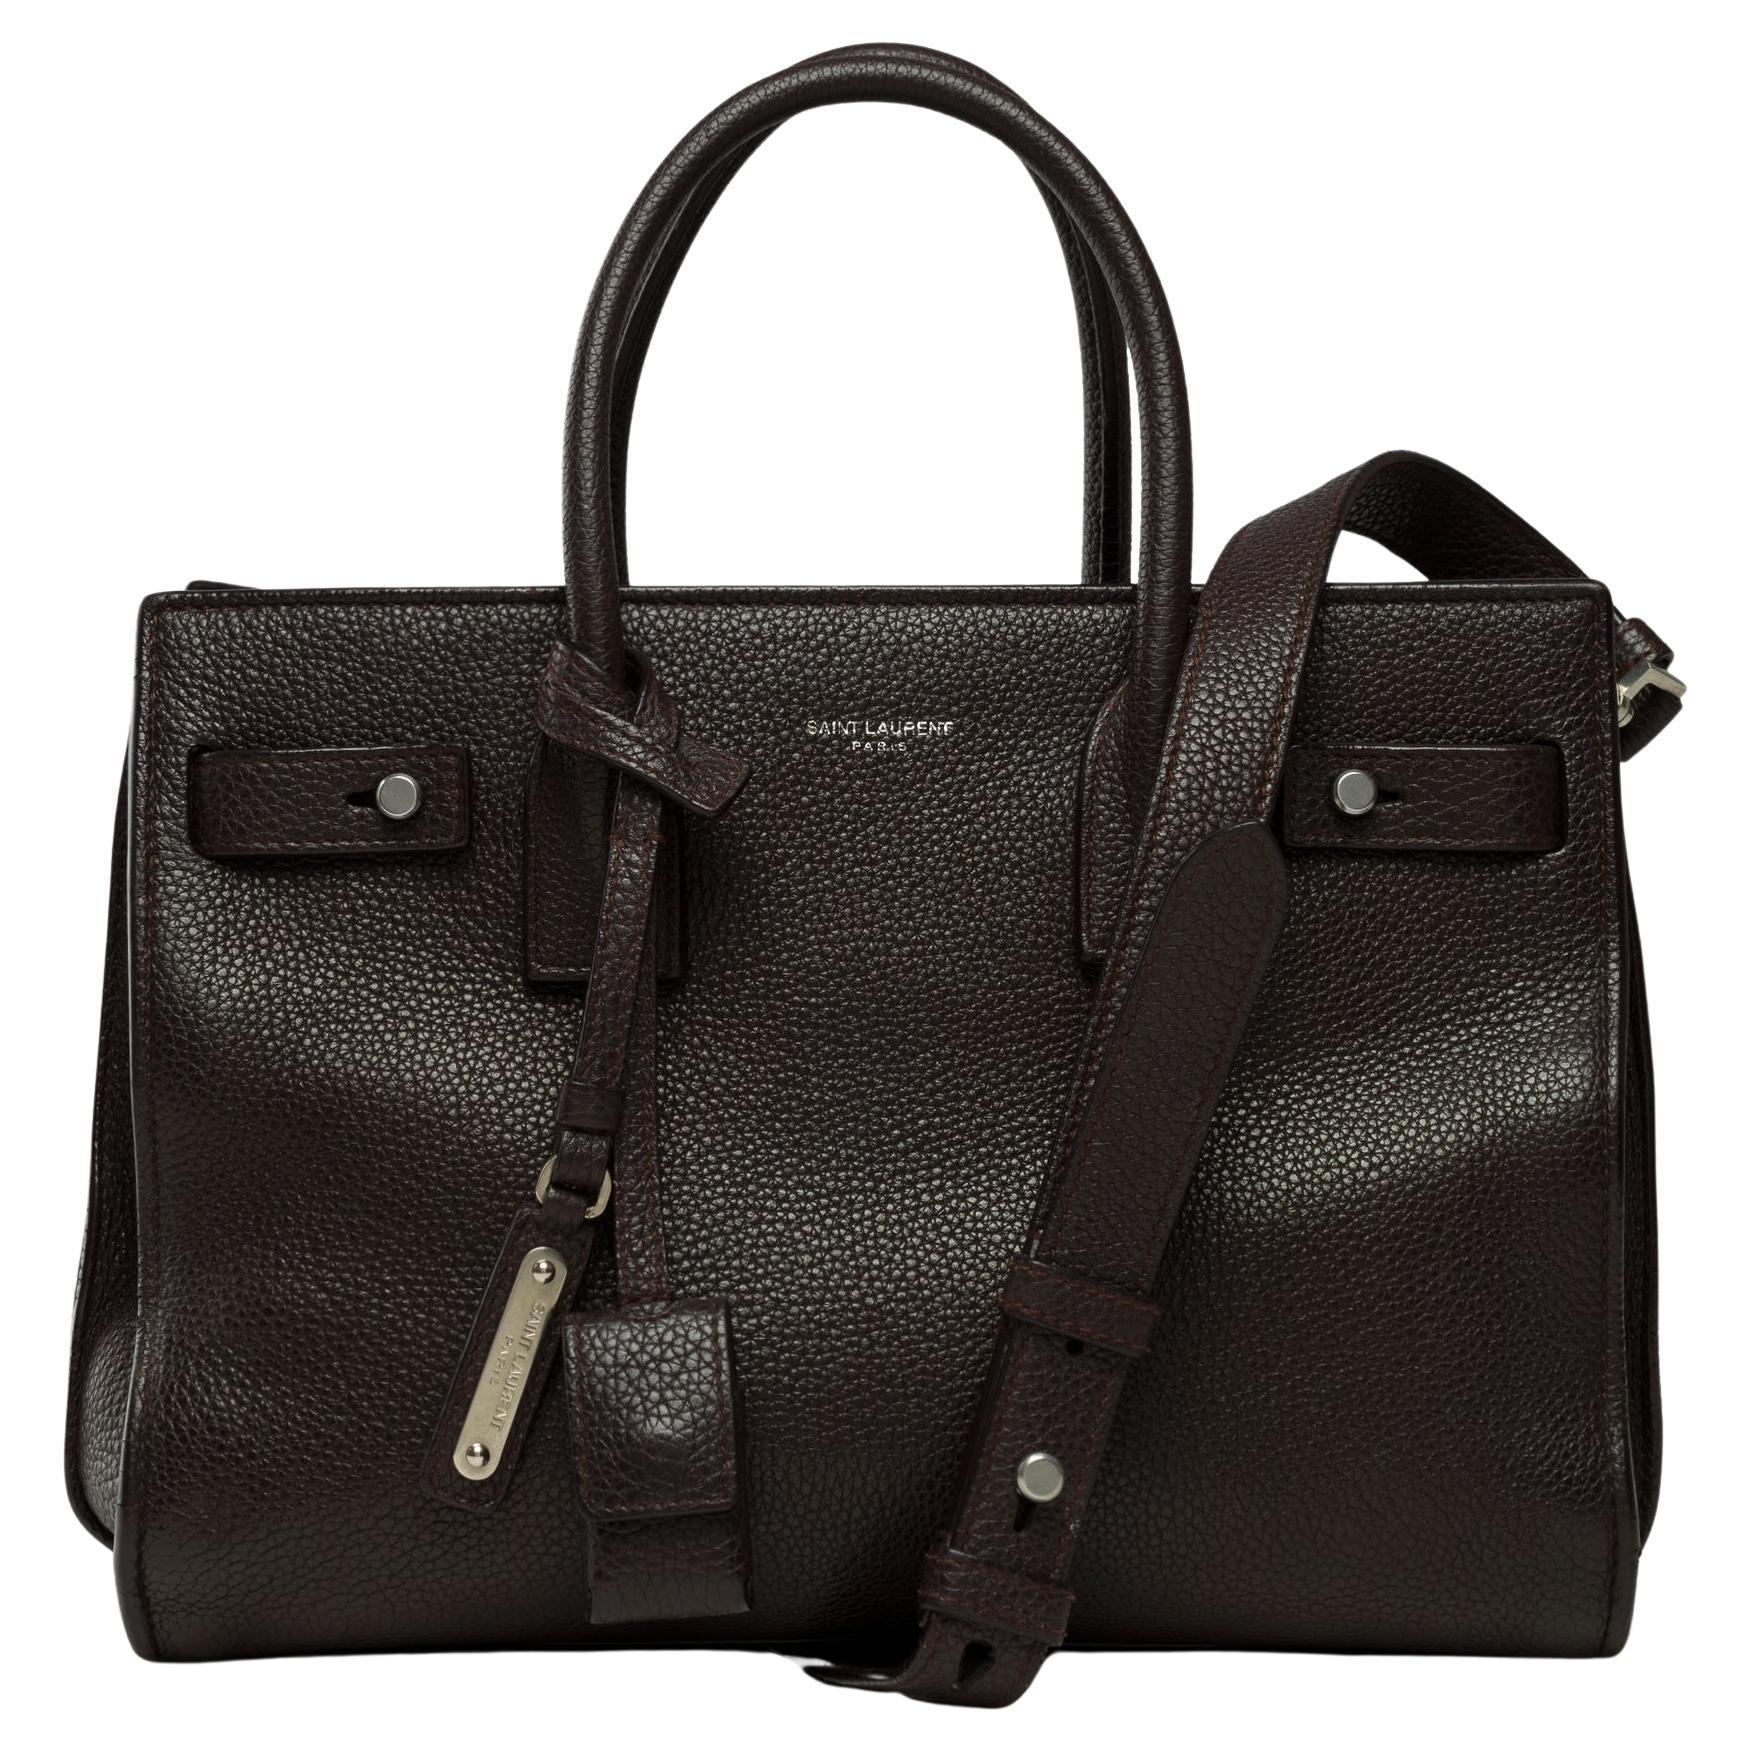 Saint Laurent Nano Sac de Jour handbag strap in burgundy grained leather, SHW For Sale